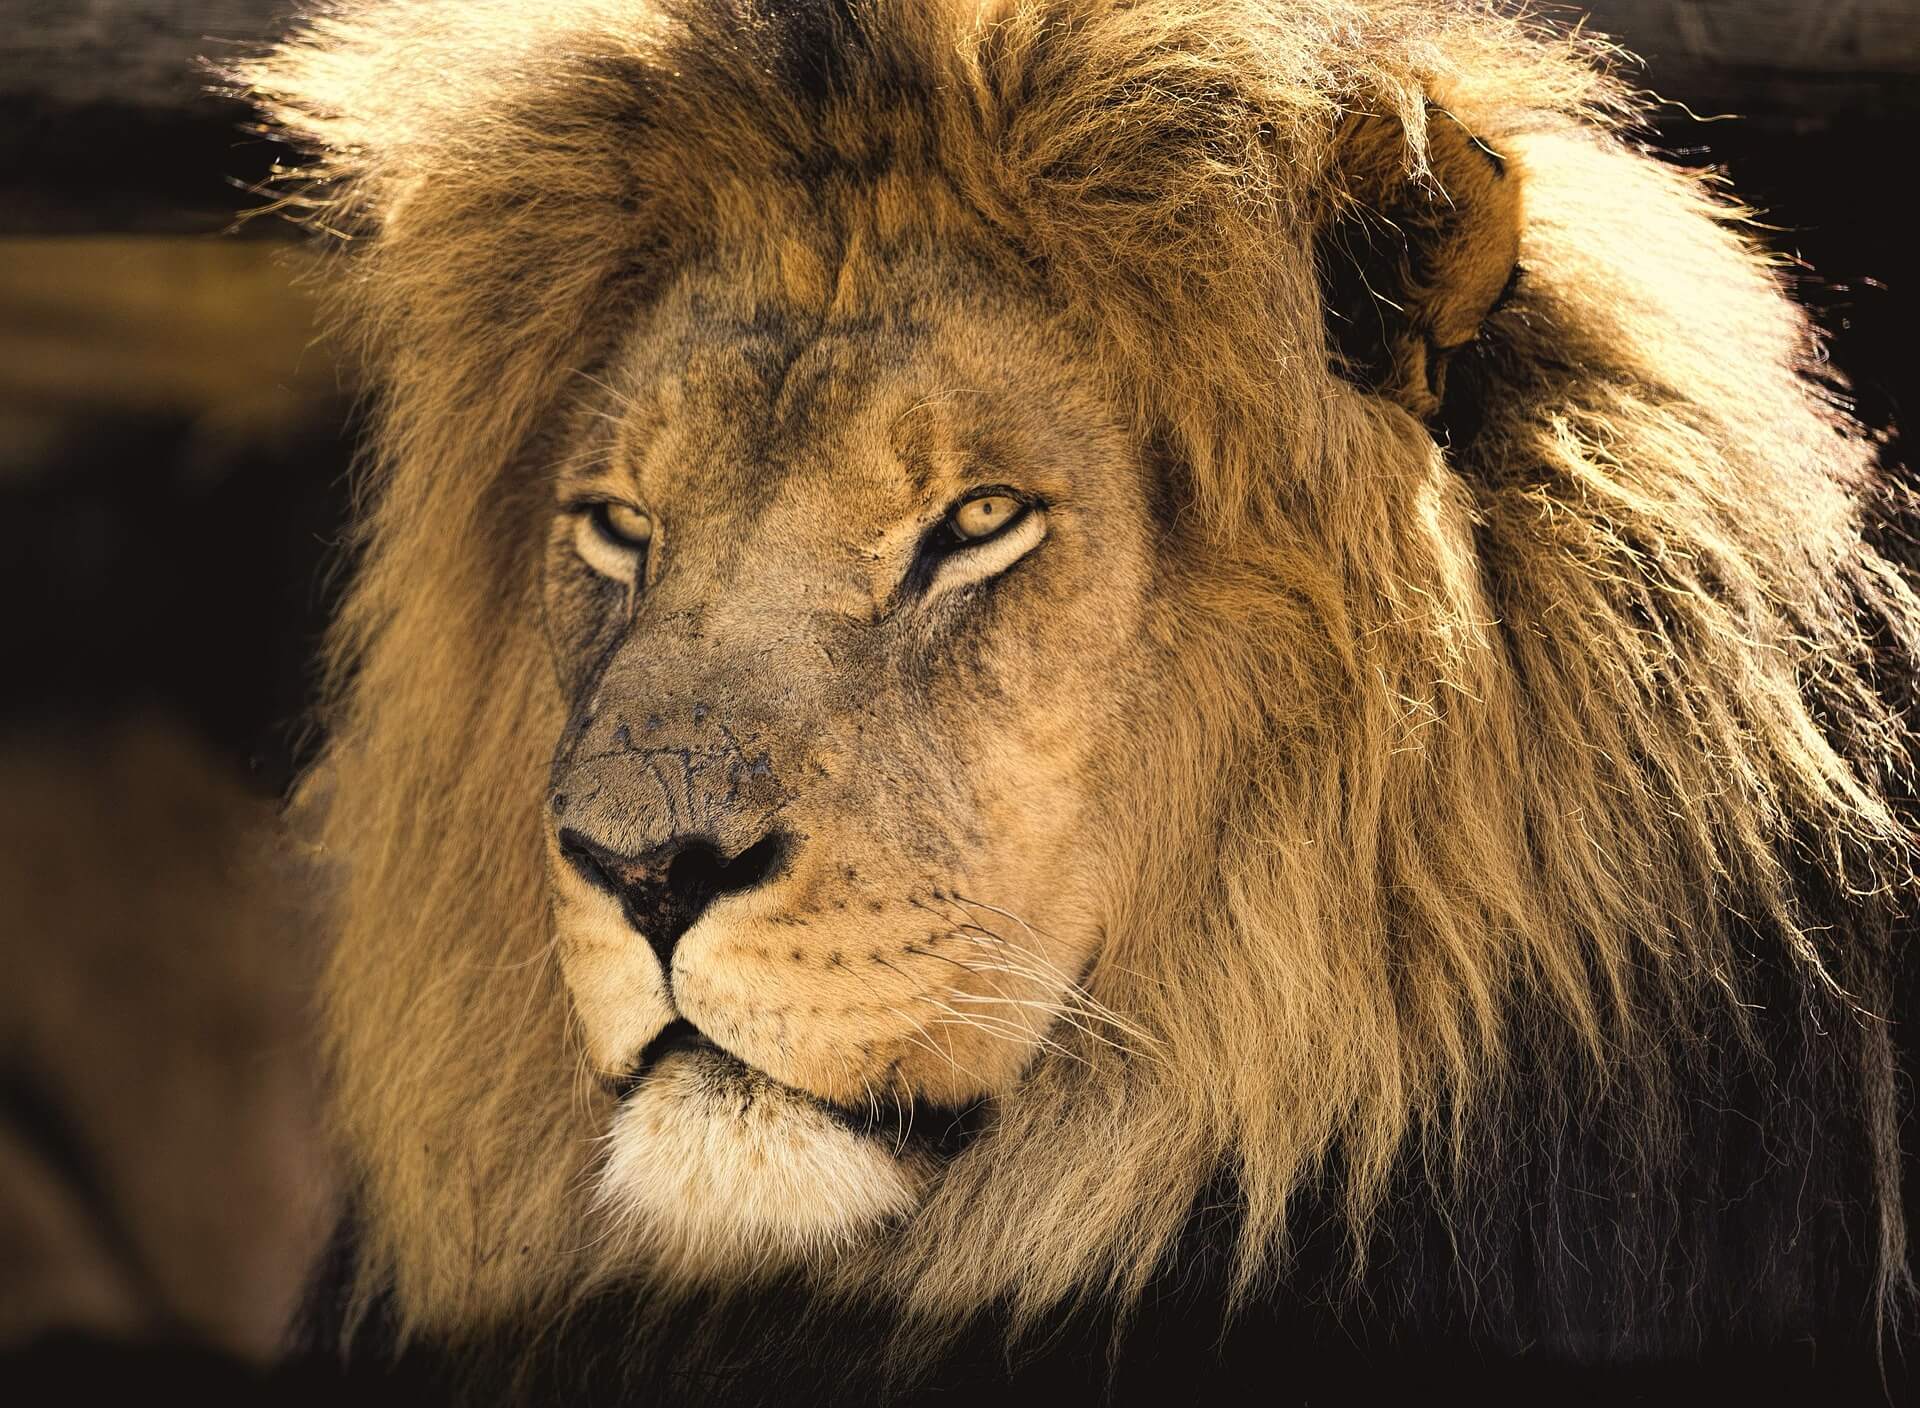 A lion representing Leo